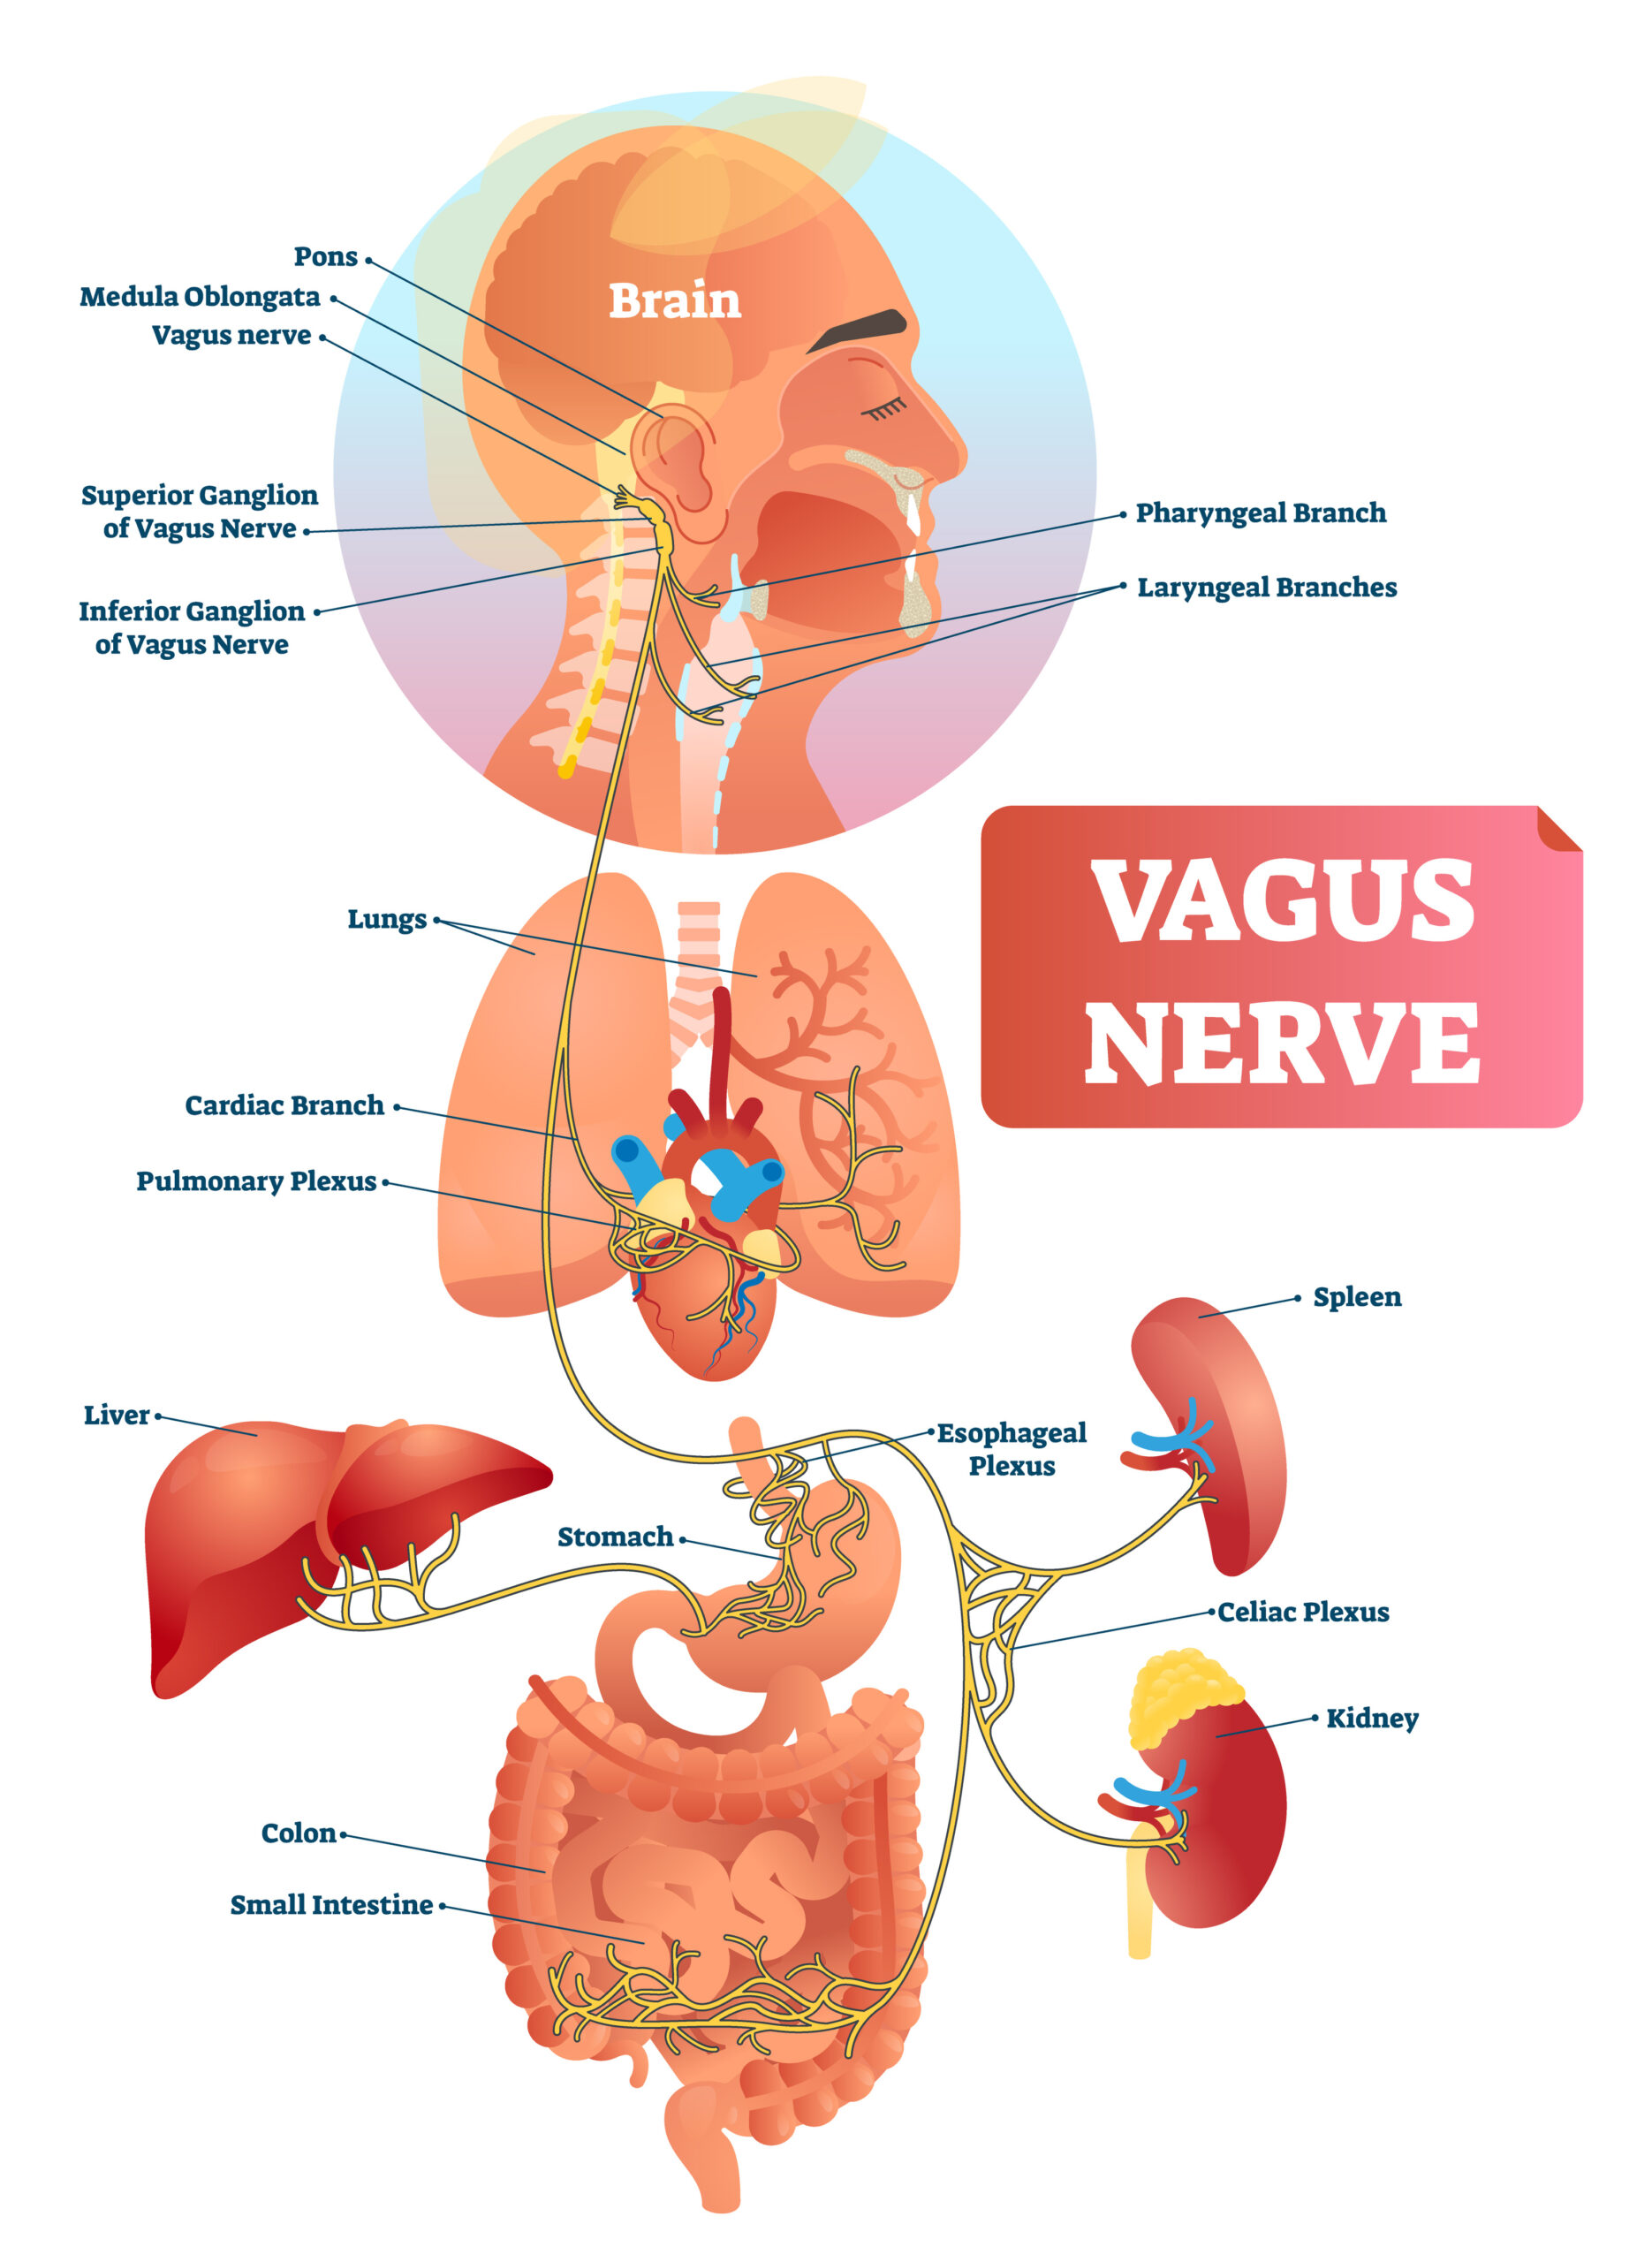 Vagus nerve vector illustration, Labeled anatomical structure scheme and location diagram of human body longest nerve.